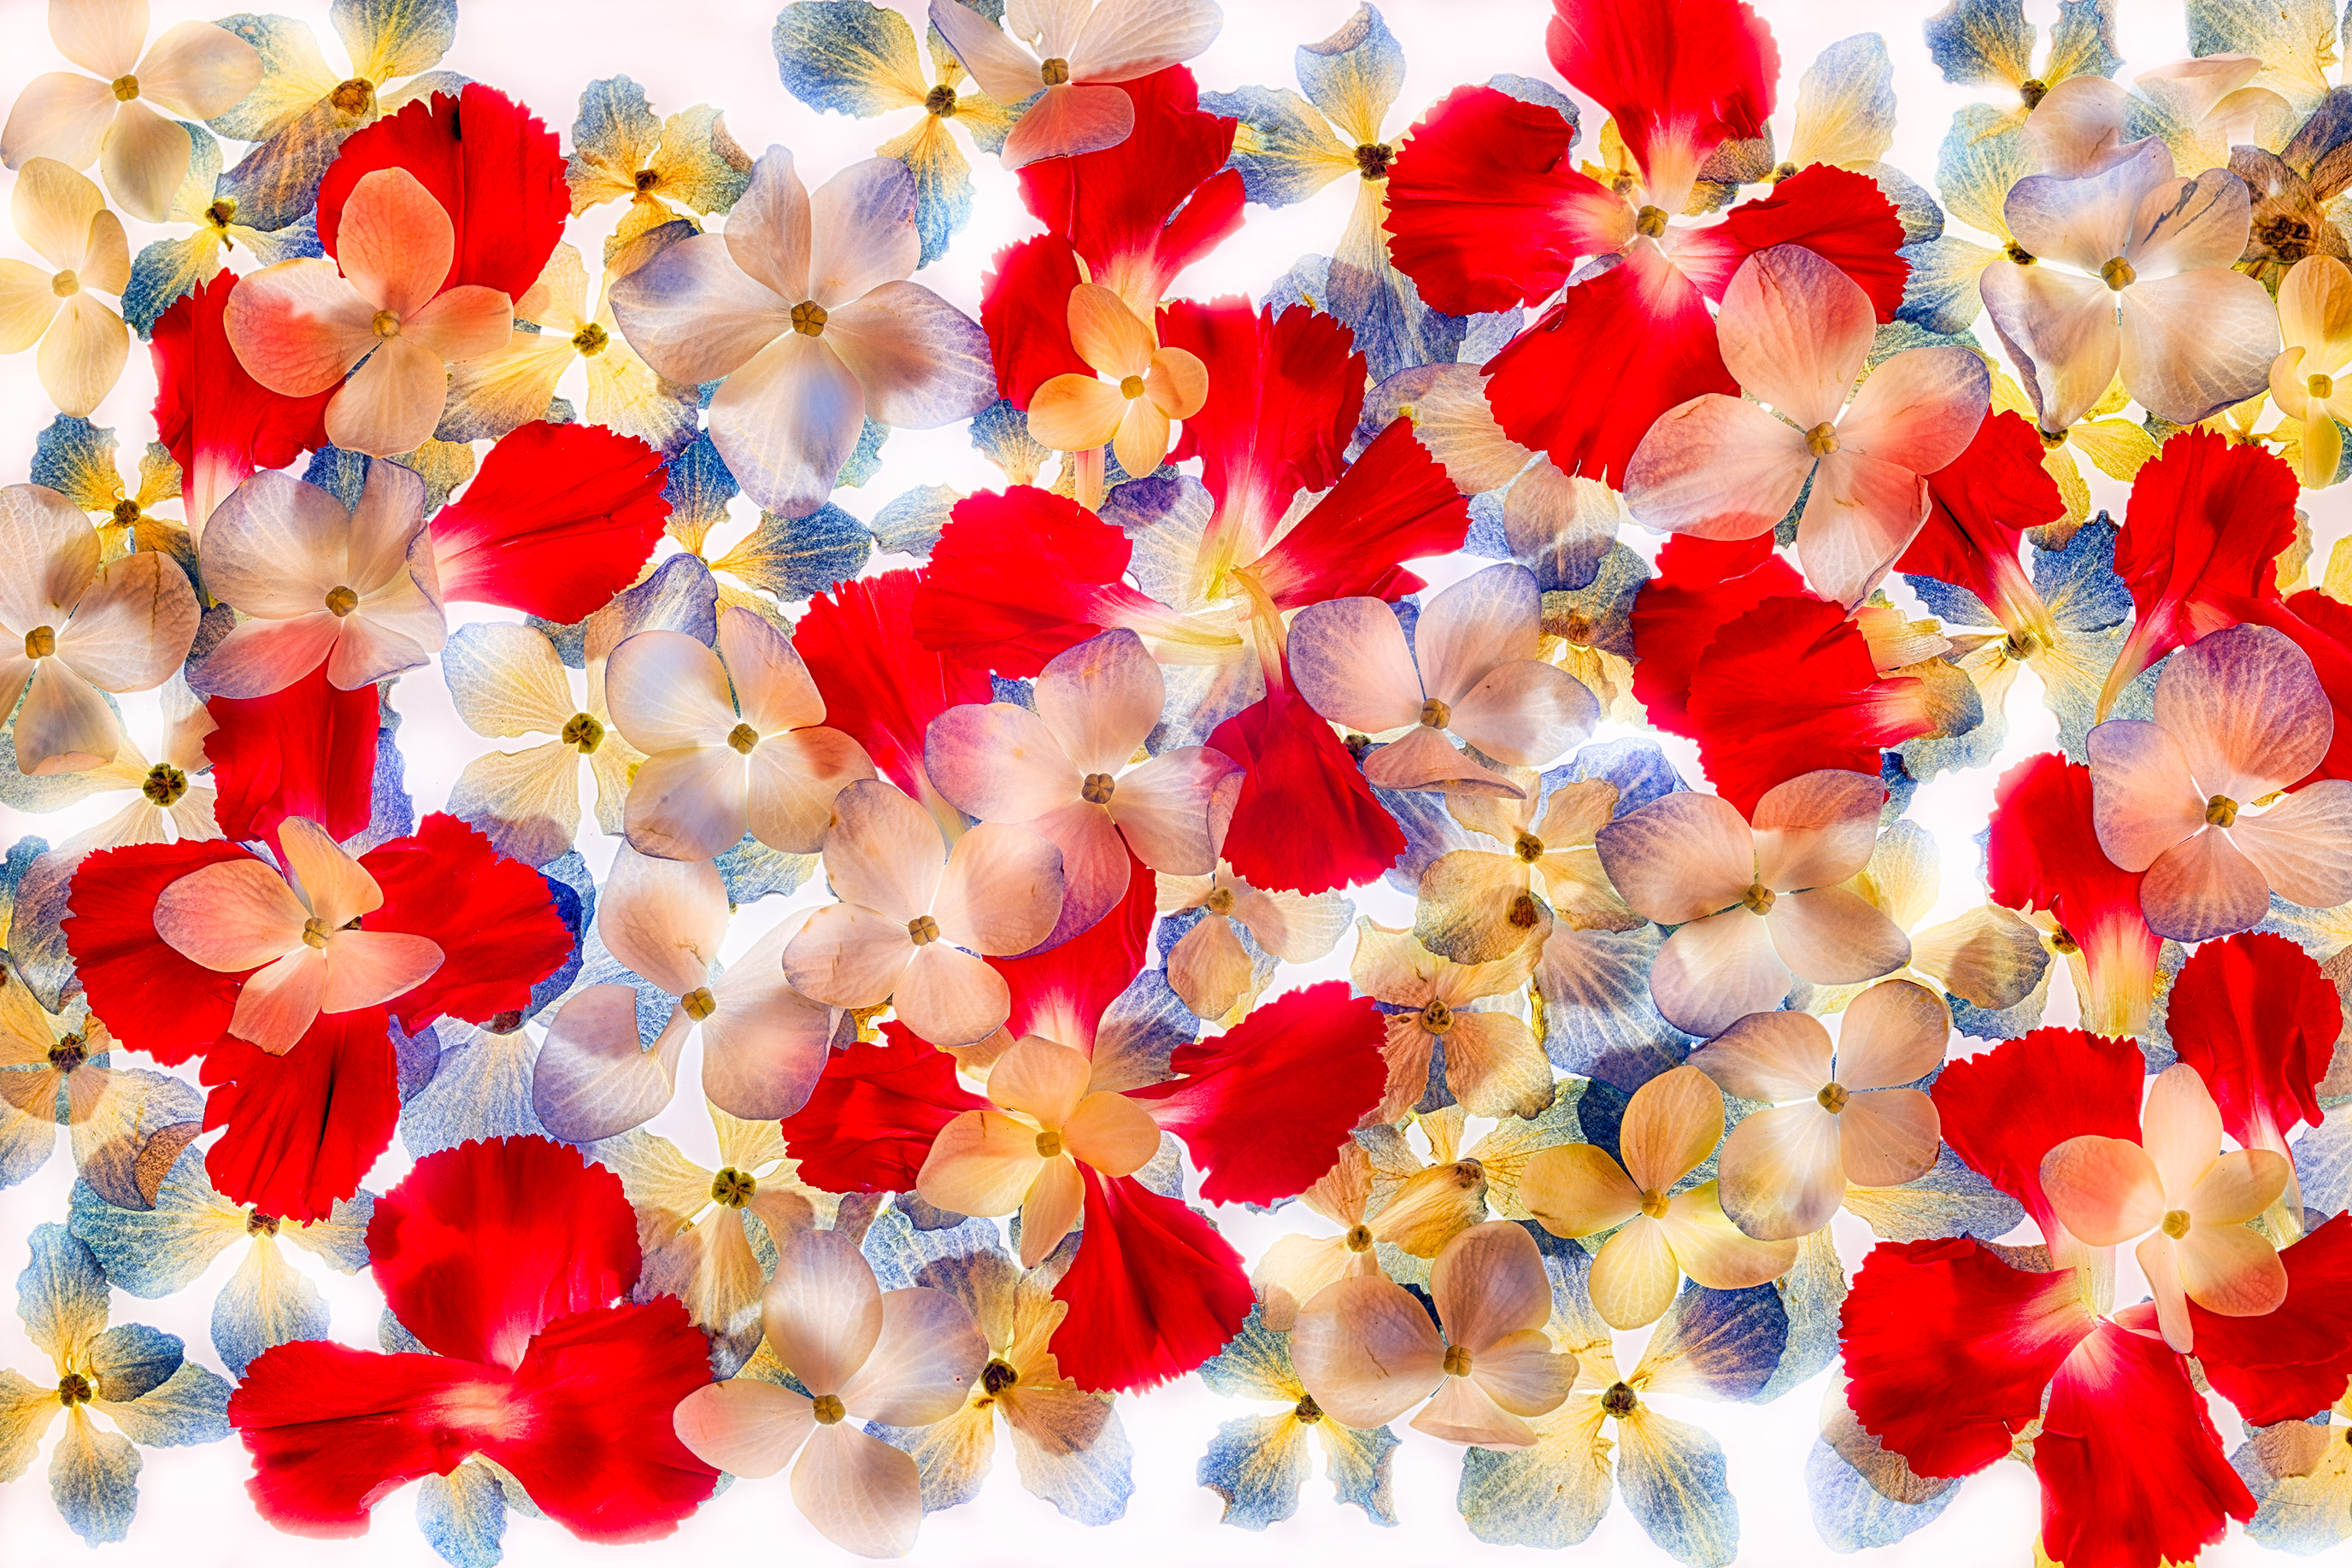 Hydrangea and Carnation Petals © Harold Davis